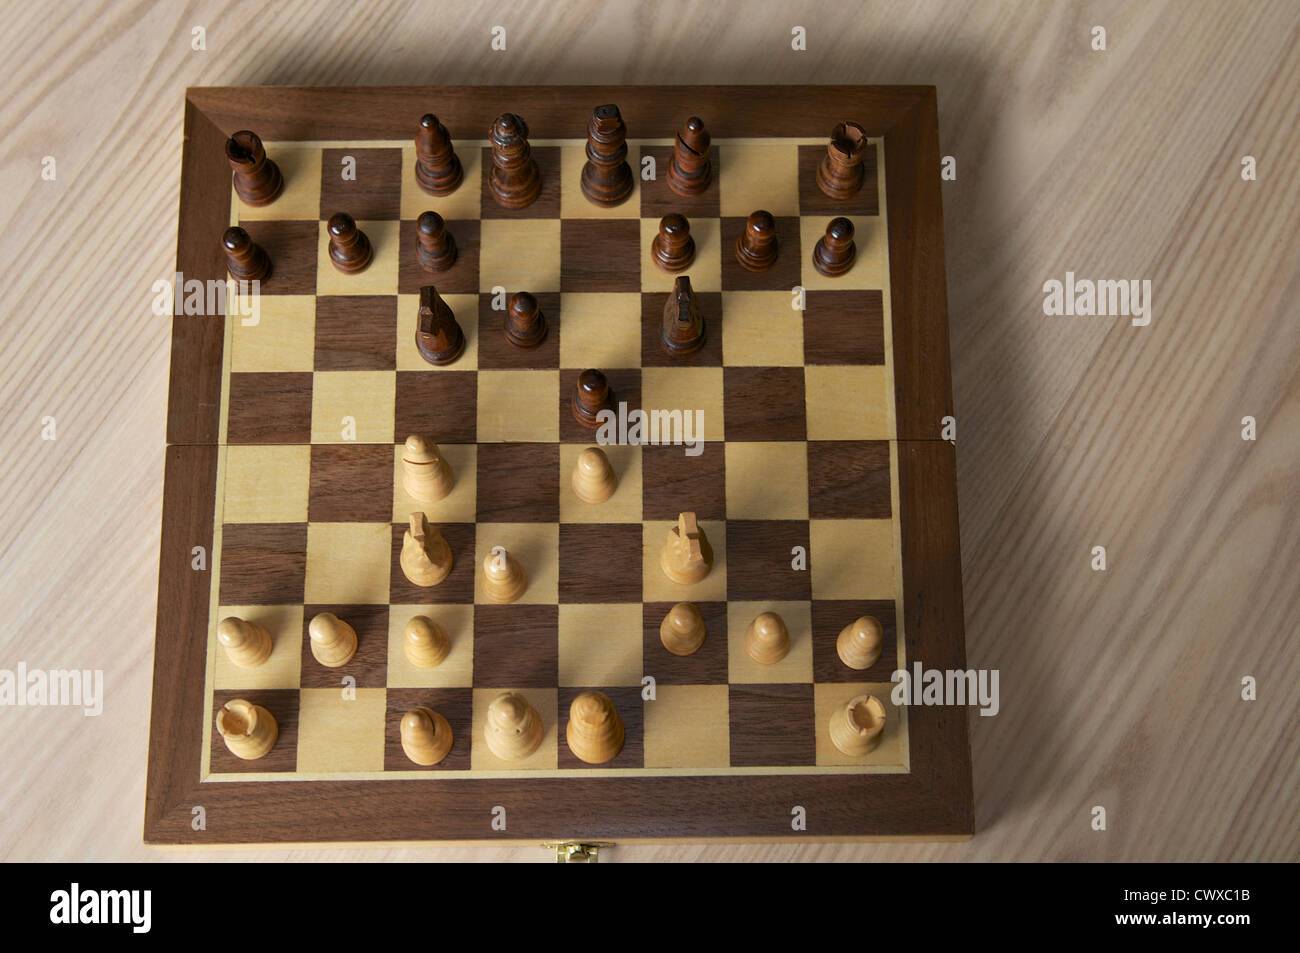 Classic International Chess board Stock Photo